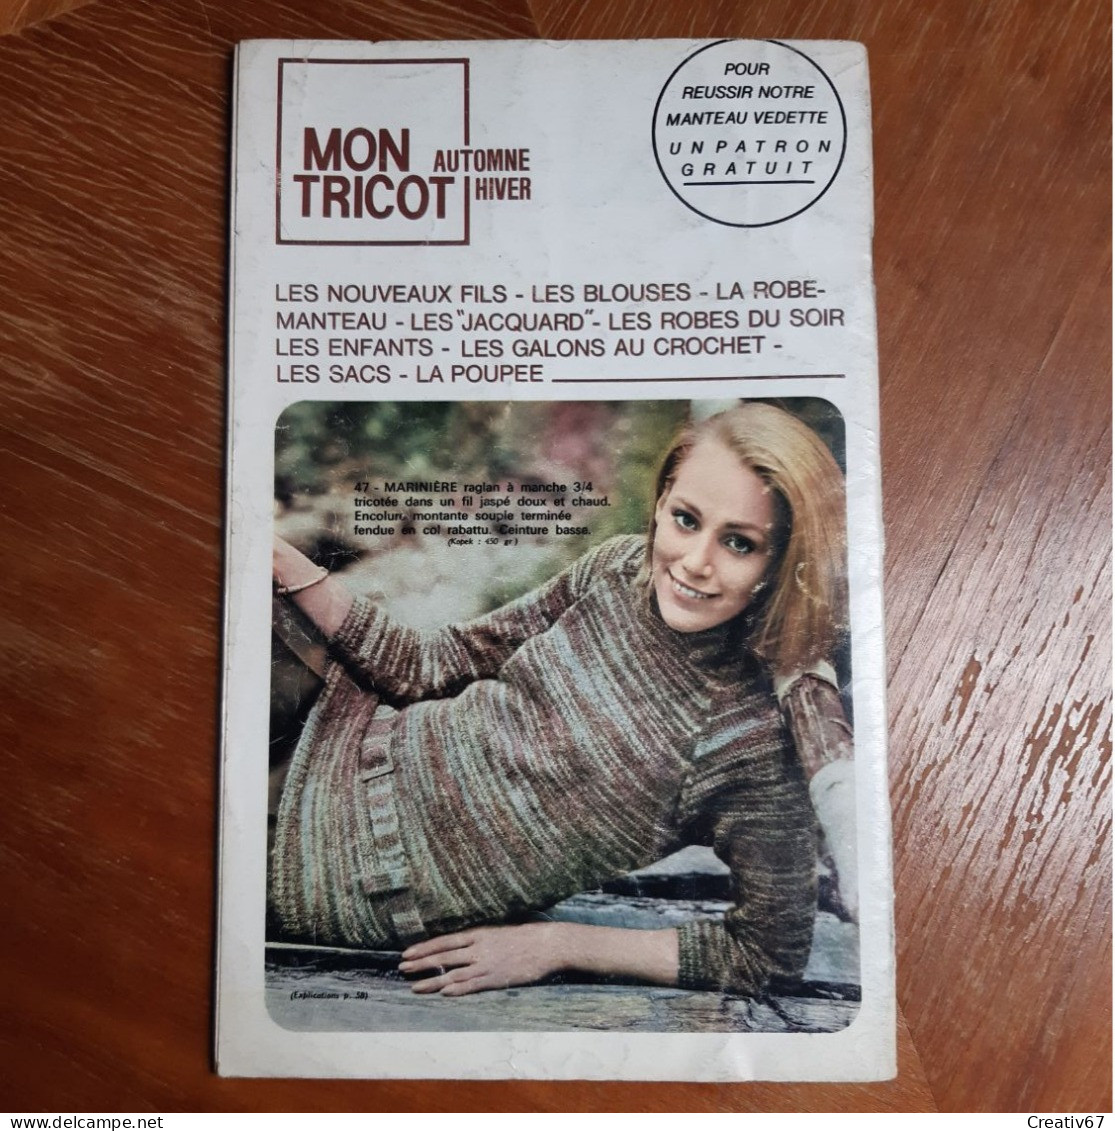 Mon Tricot 75 Edition De 1967 - Literatur